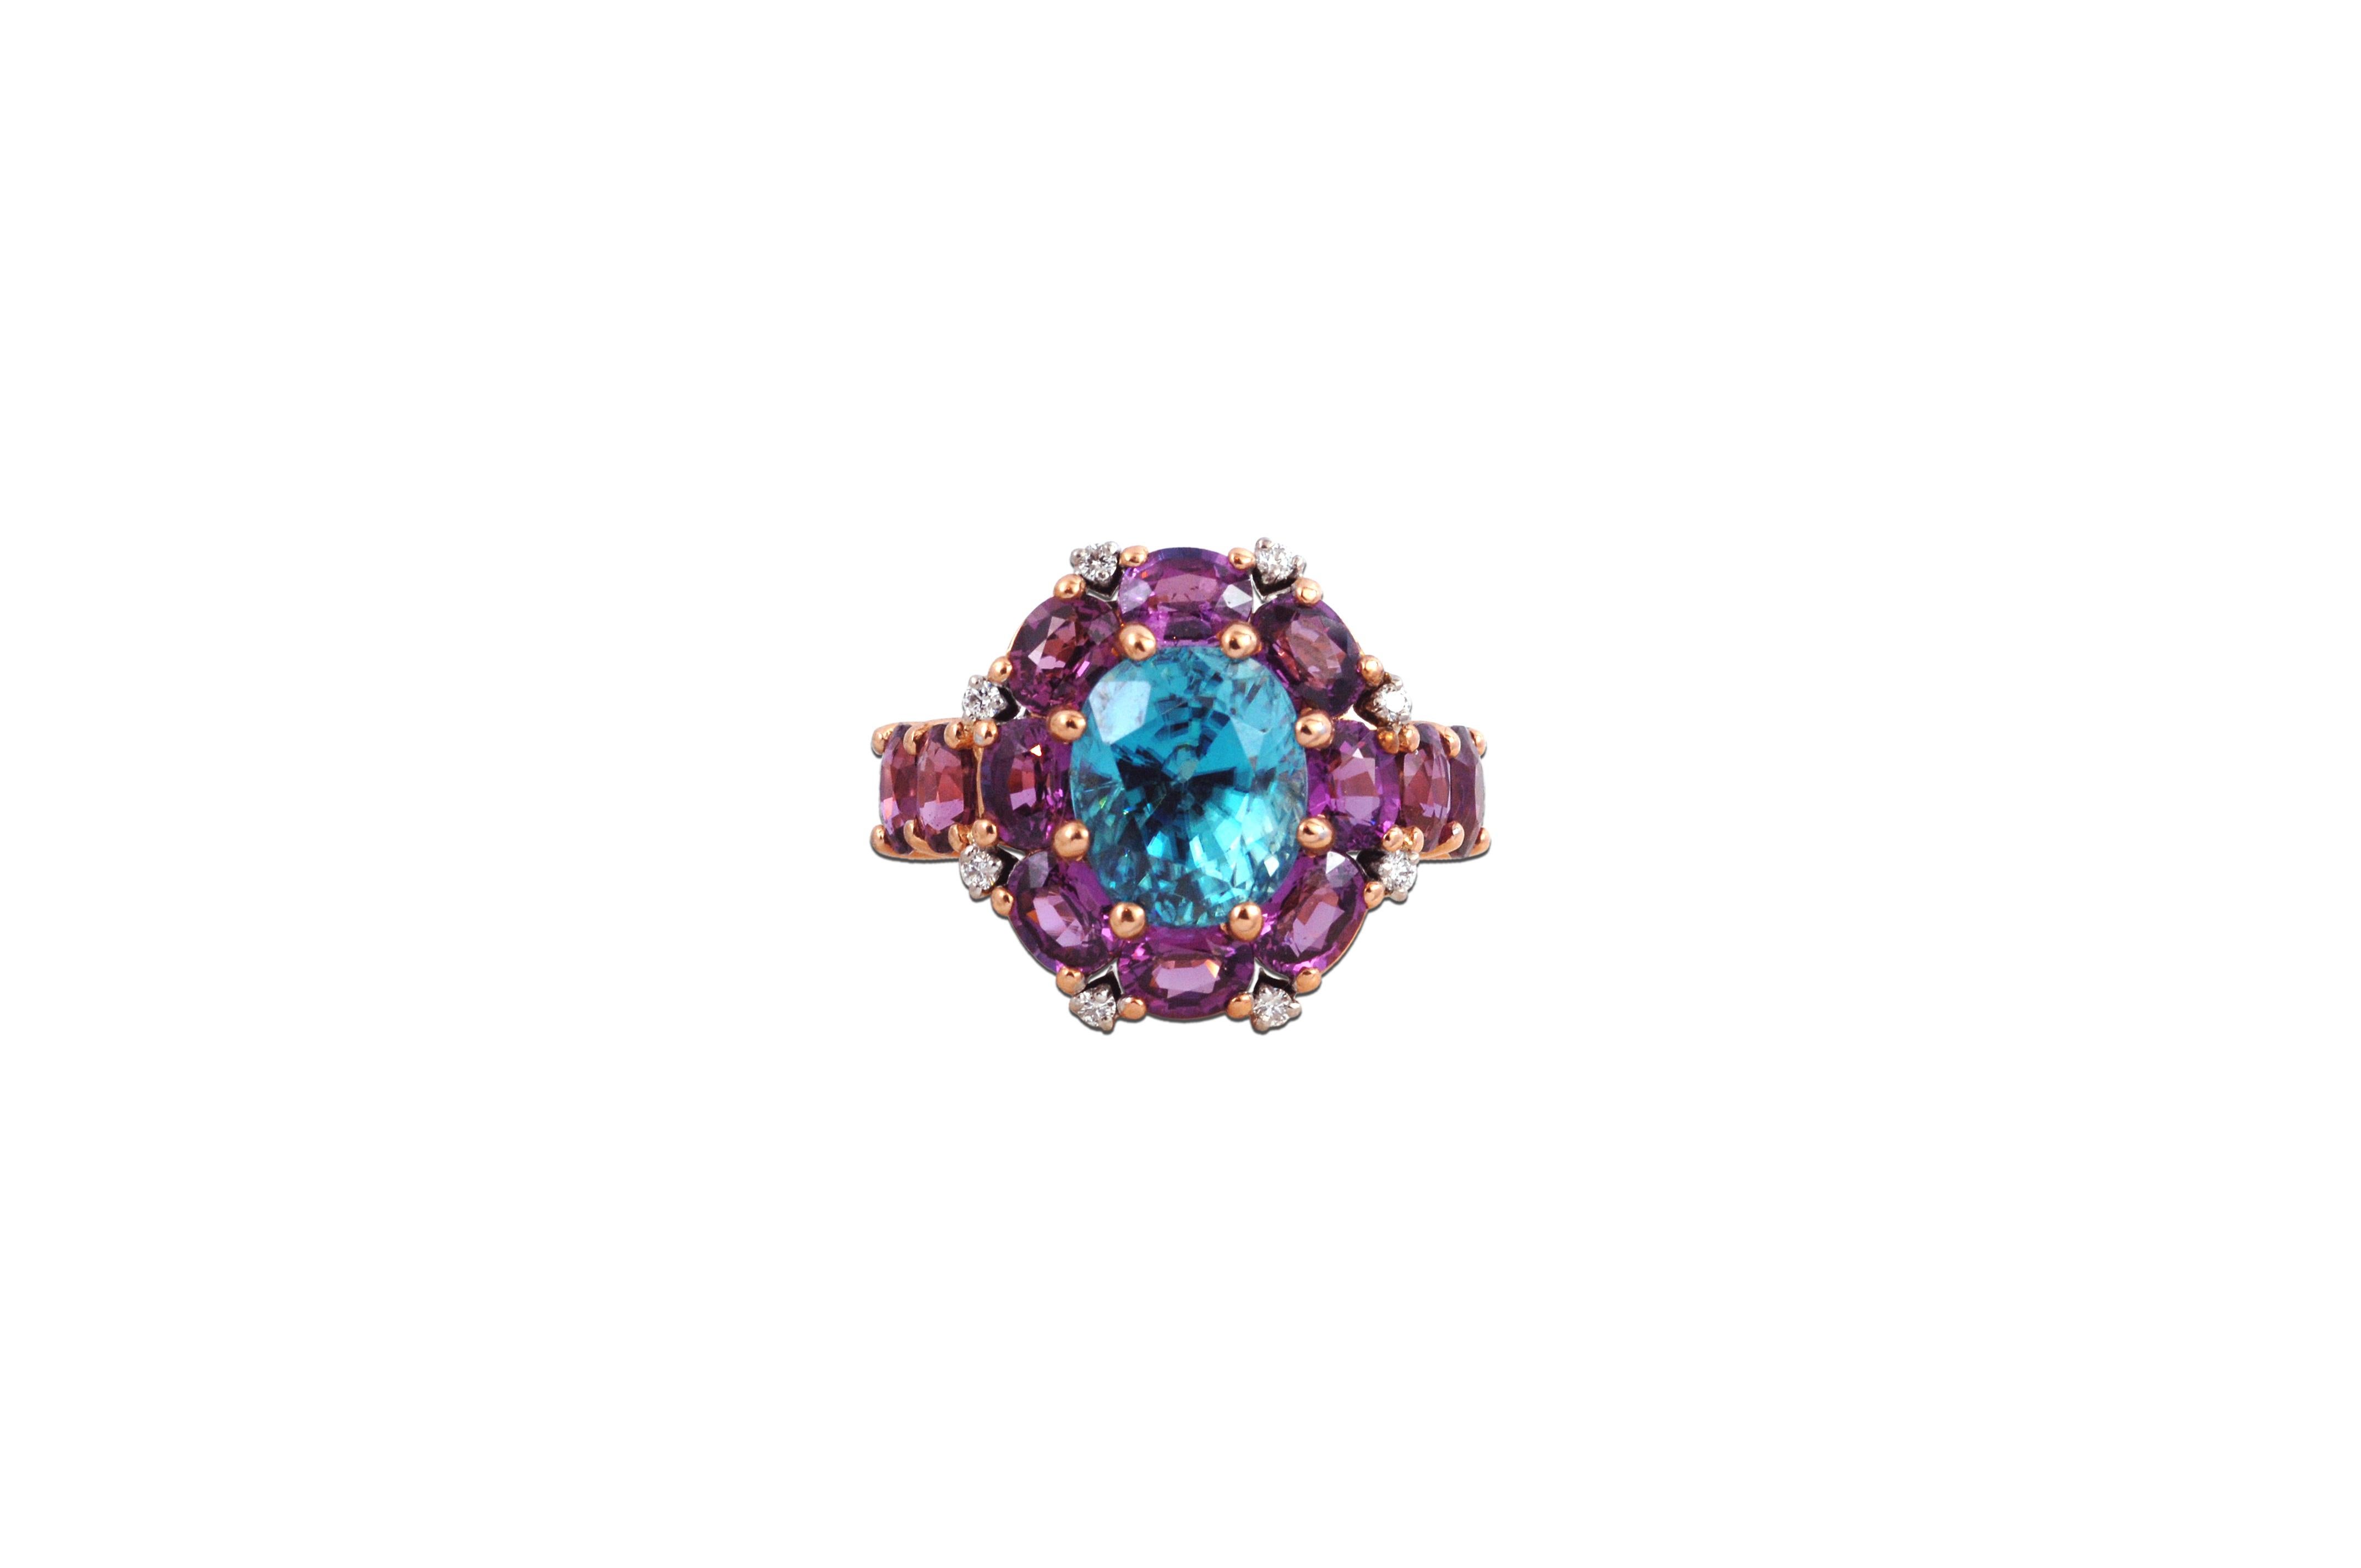 Blue Zircon 27.22 carats, Almandite 5.69 carats with Diamond 0.09 carat Ring set in 18 Karat Rose Gold Settings 

Width: 1.8 cm
Length: 1.7 cm 
Ring Size: 54

